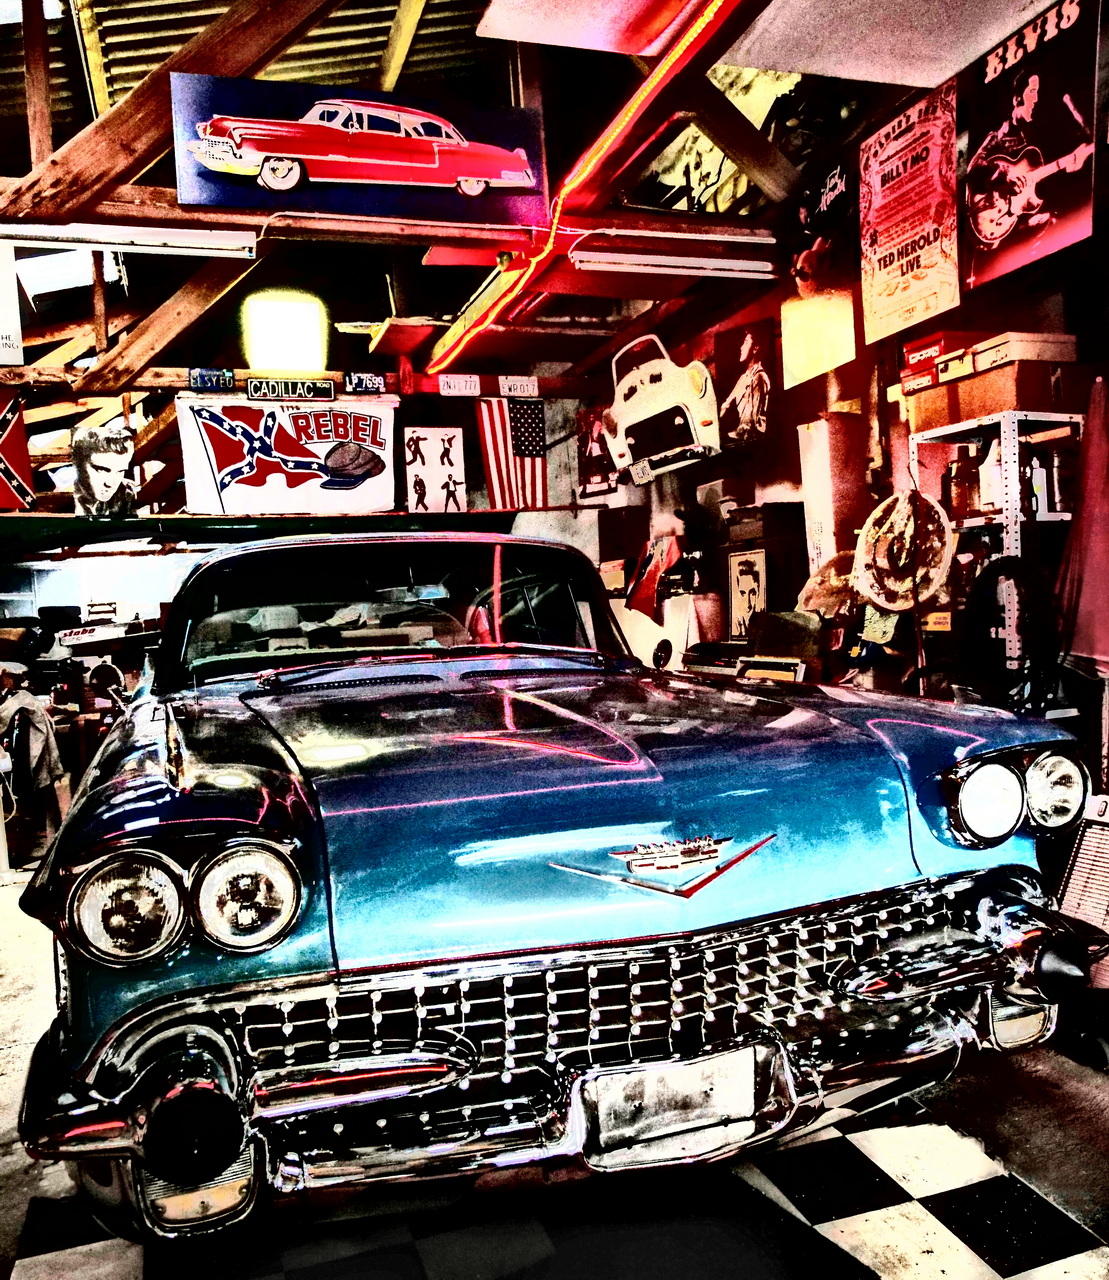 1958er Cadillac in der Hobbywerkstatt.